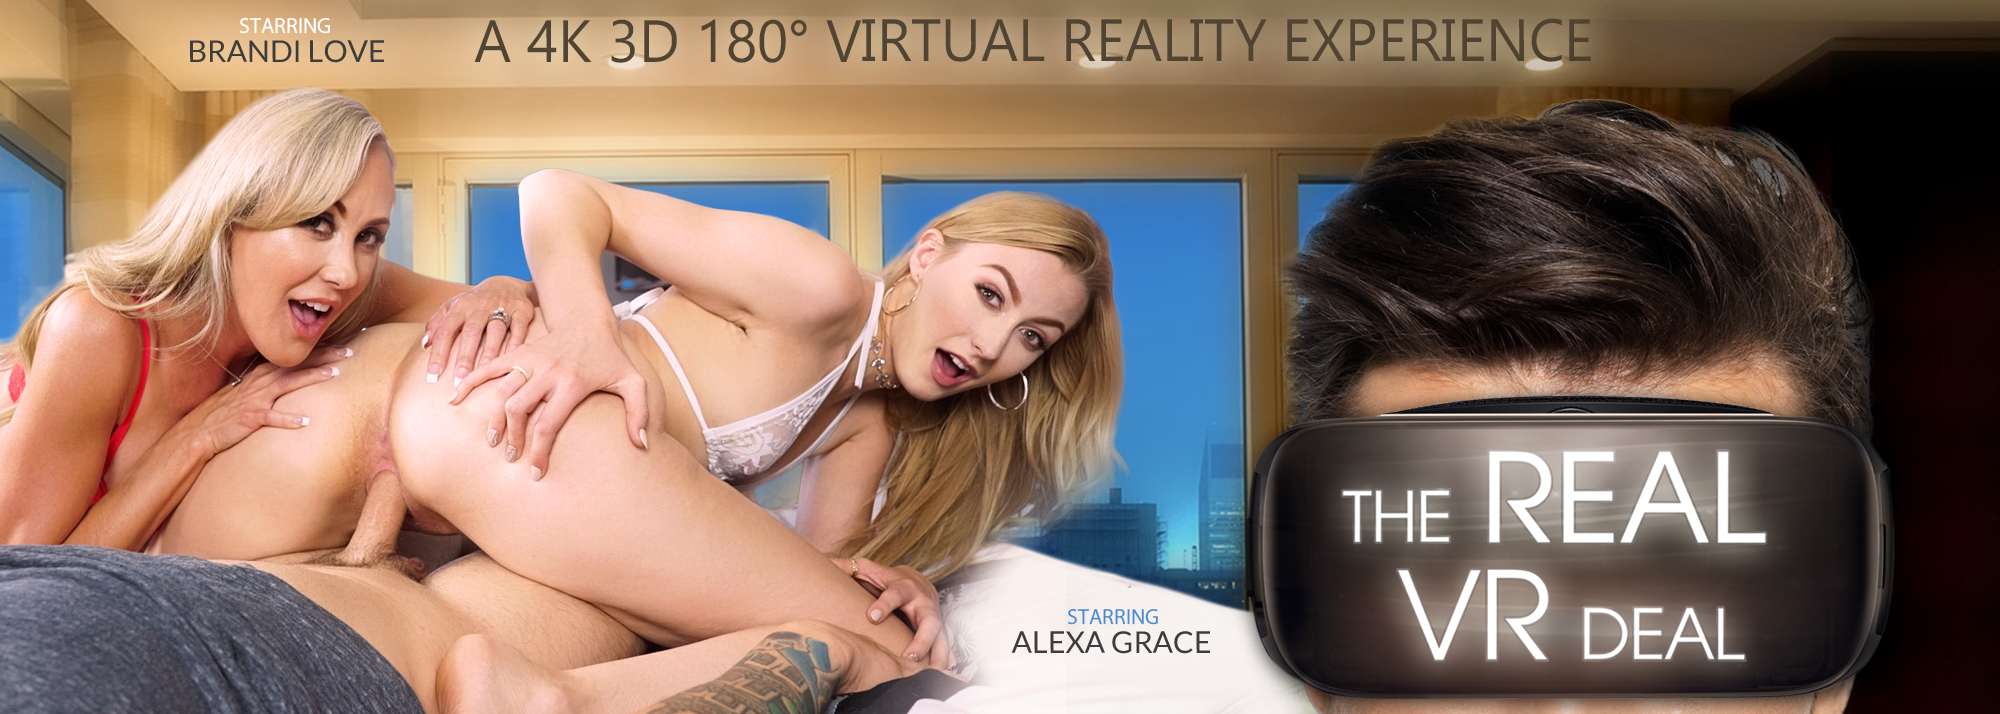 Brandi Love Alexa Grace Sex Hd Video - The Real VR Deal VR Porn Video: 8K, 4K, Full HD and 180/360 POV | VR Bangers